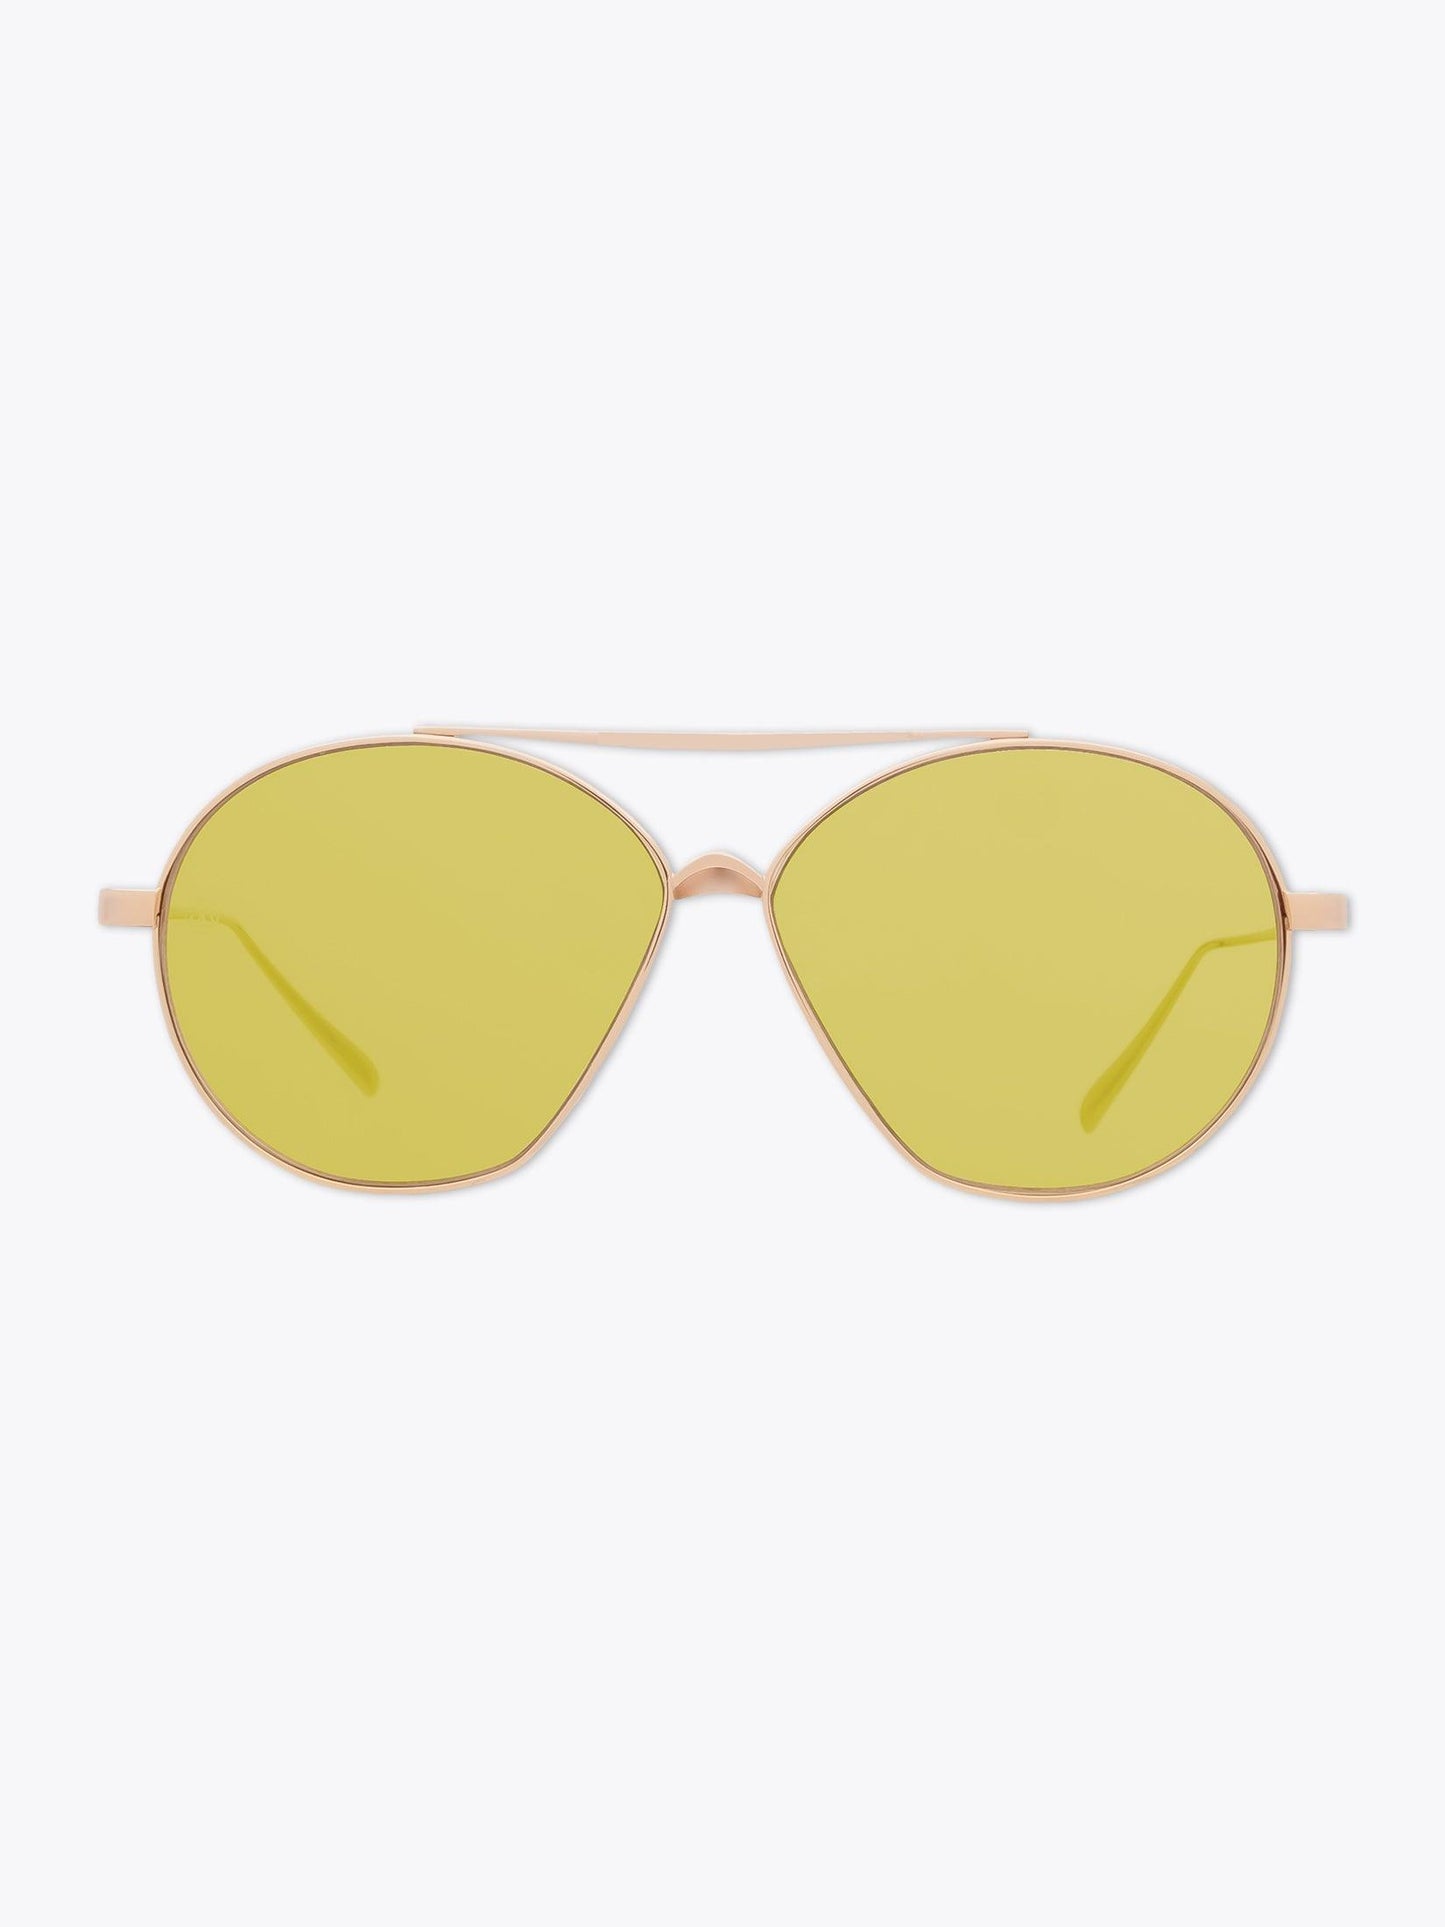 8000 Eyewear 8M7 Gold-Tone Pilot Sunglasses - Apodep.com